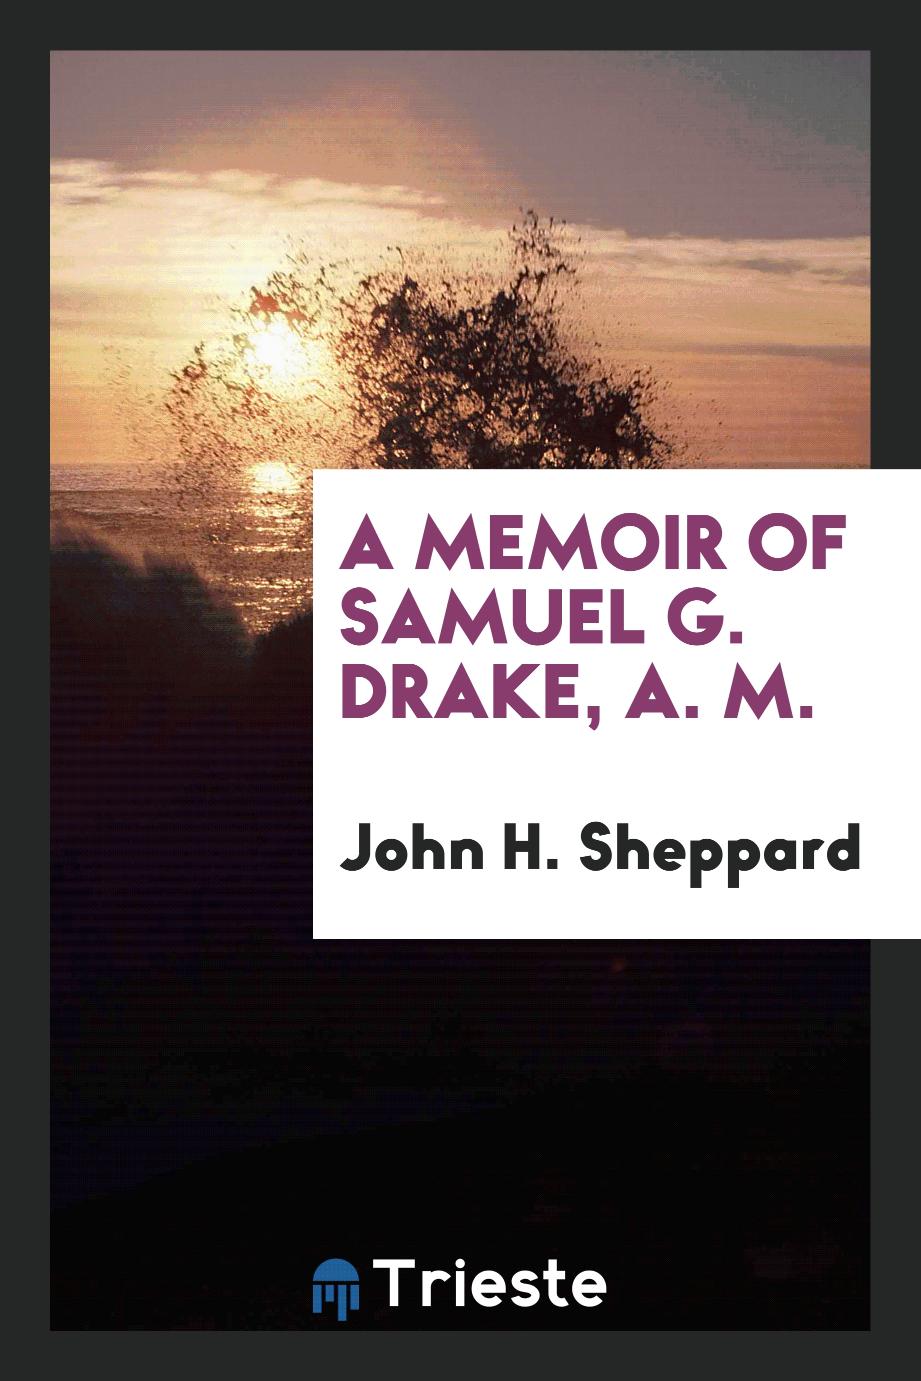 A memoir of Samuel G. Drake, A. M.